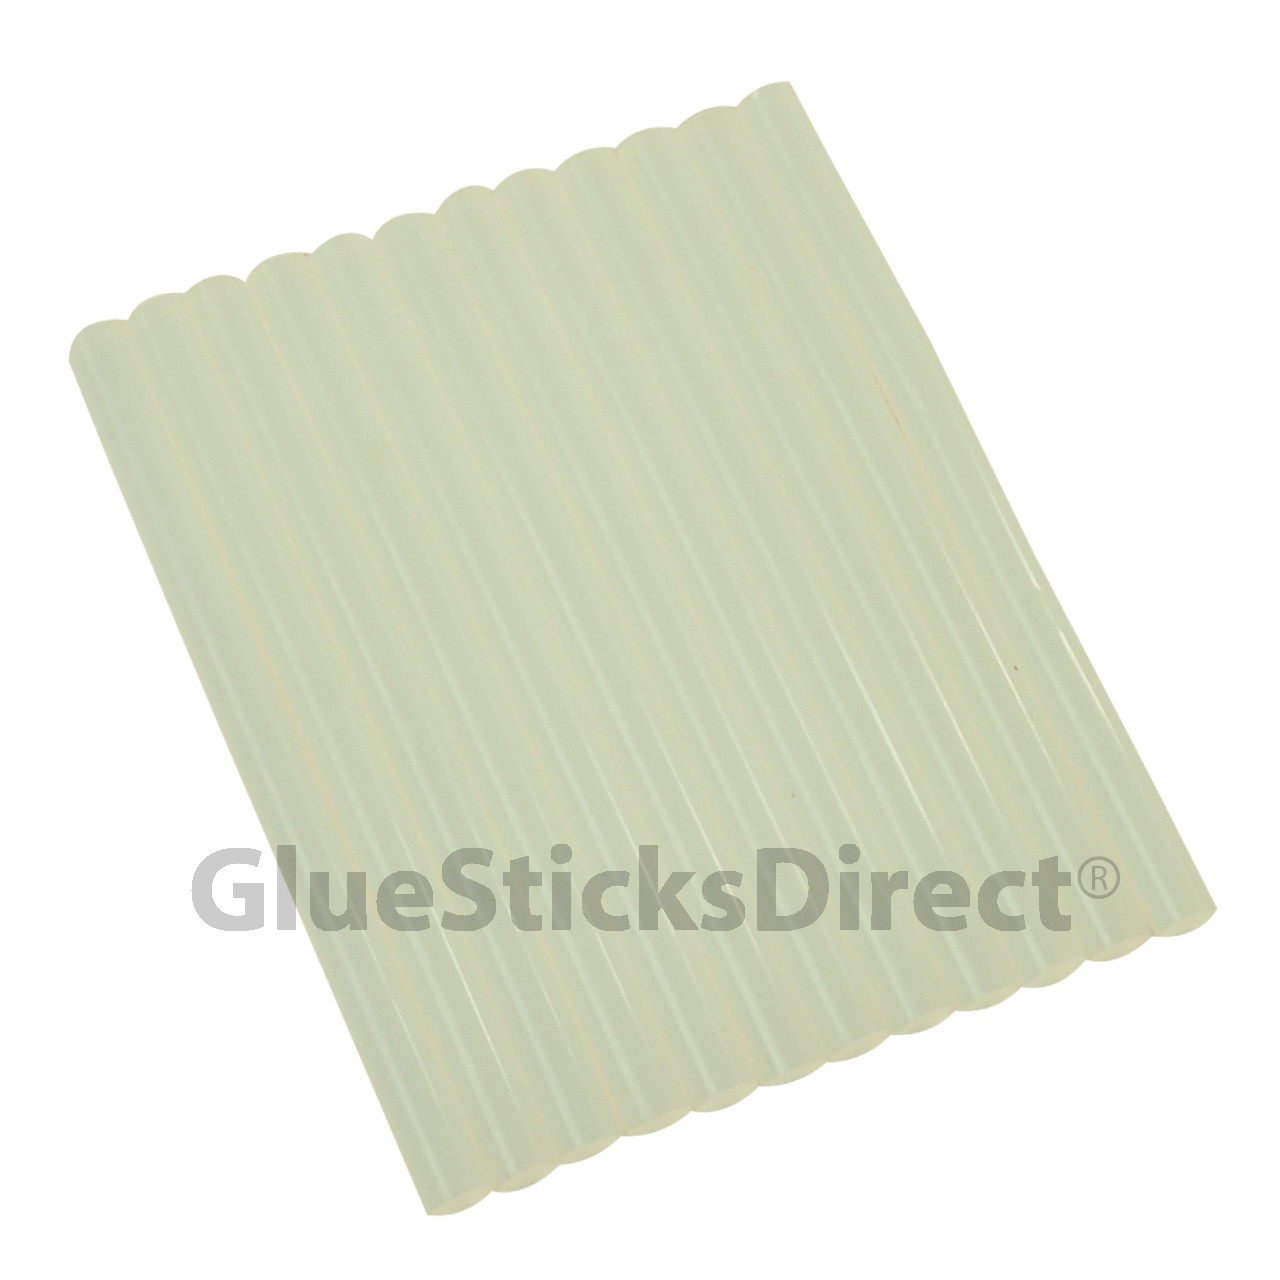 GlueSticksDirect Wholesale® Hot Melt Glue Stick Mini X 4 25 lbs Bulk -  GlueSticksDirect